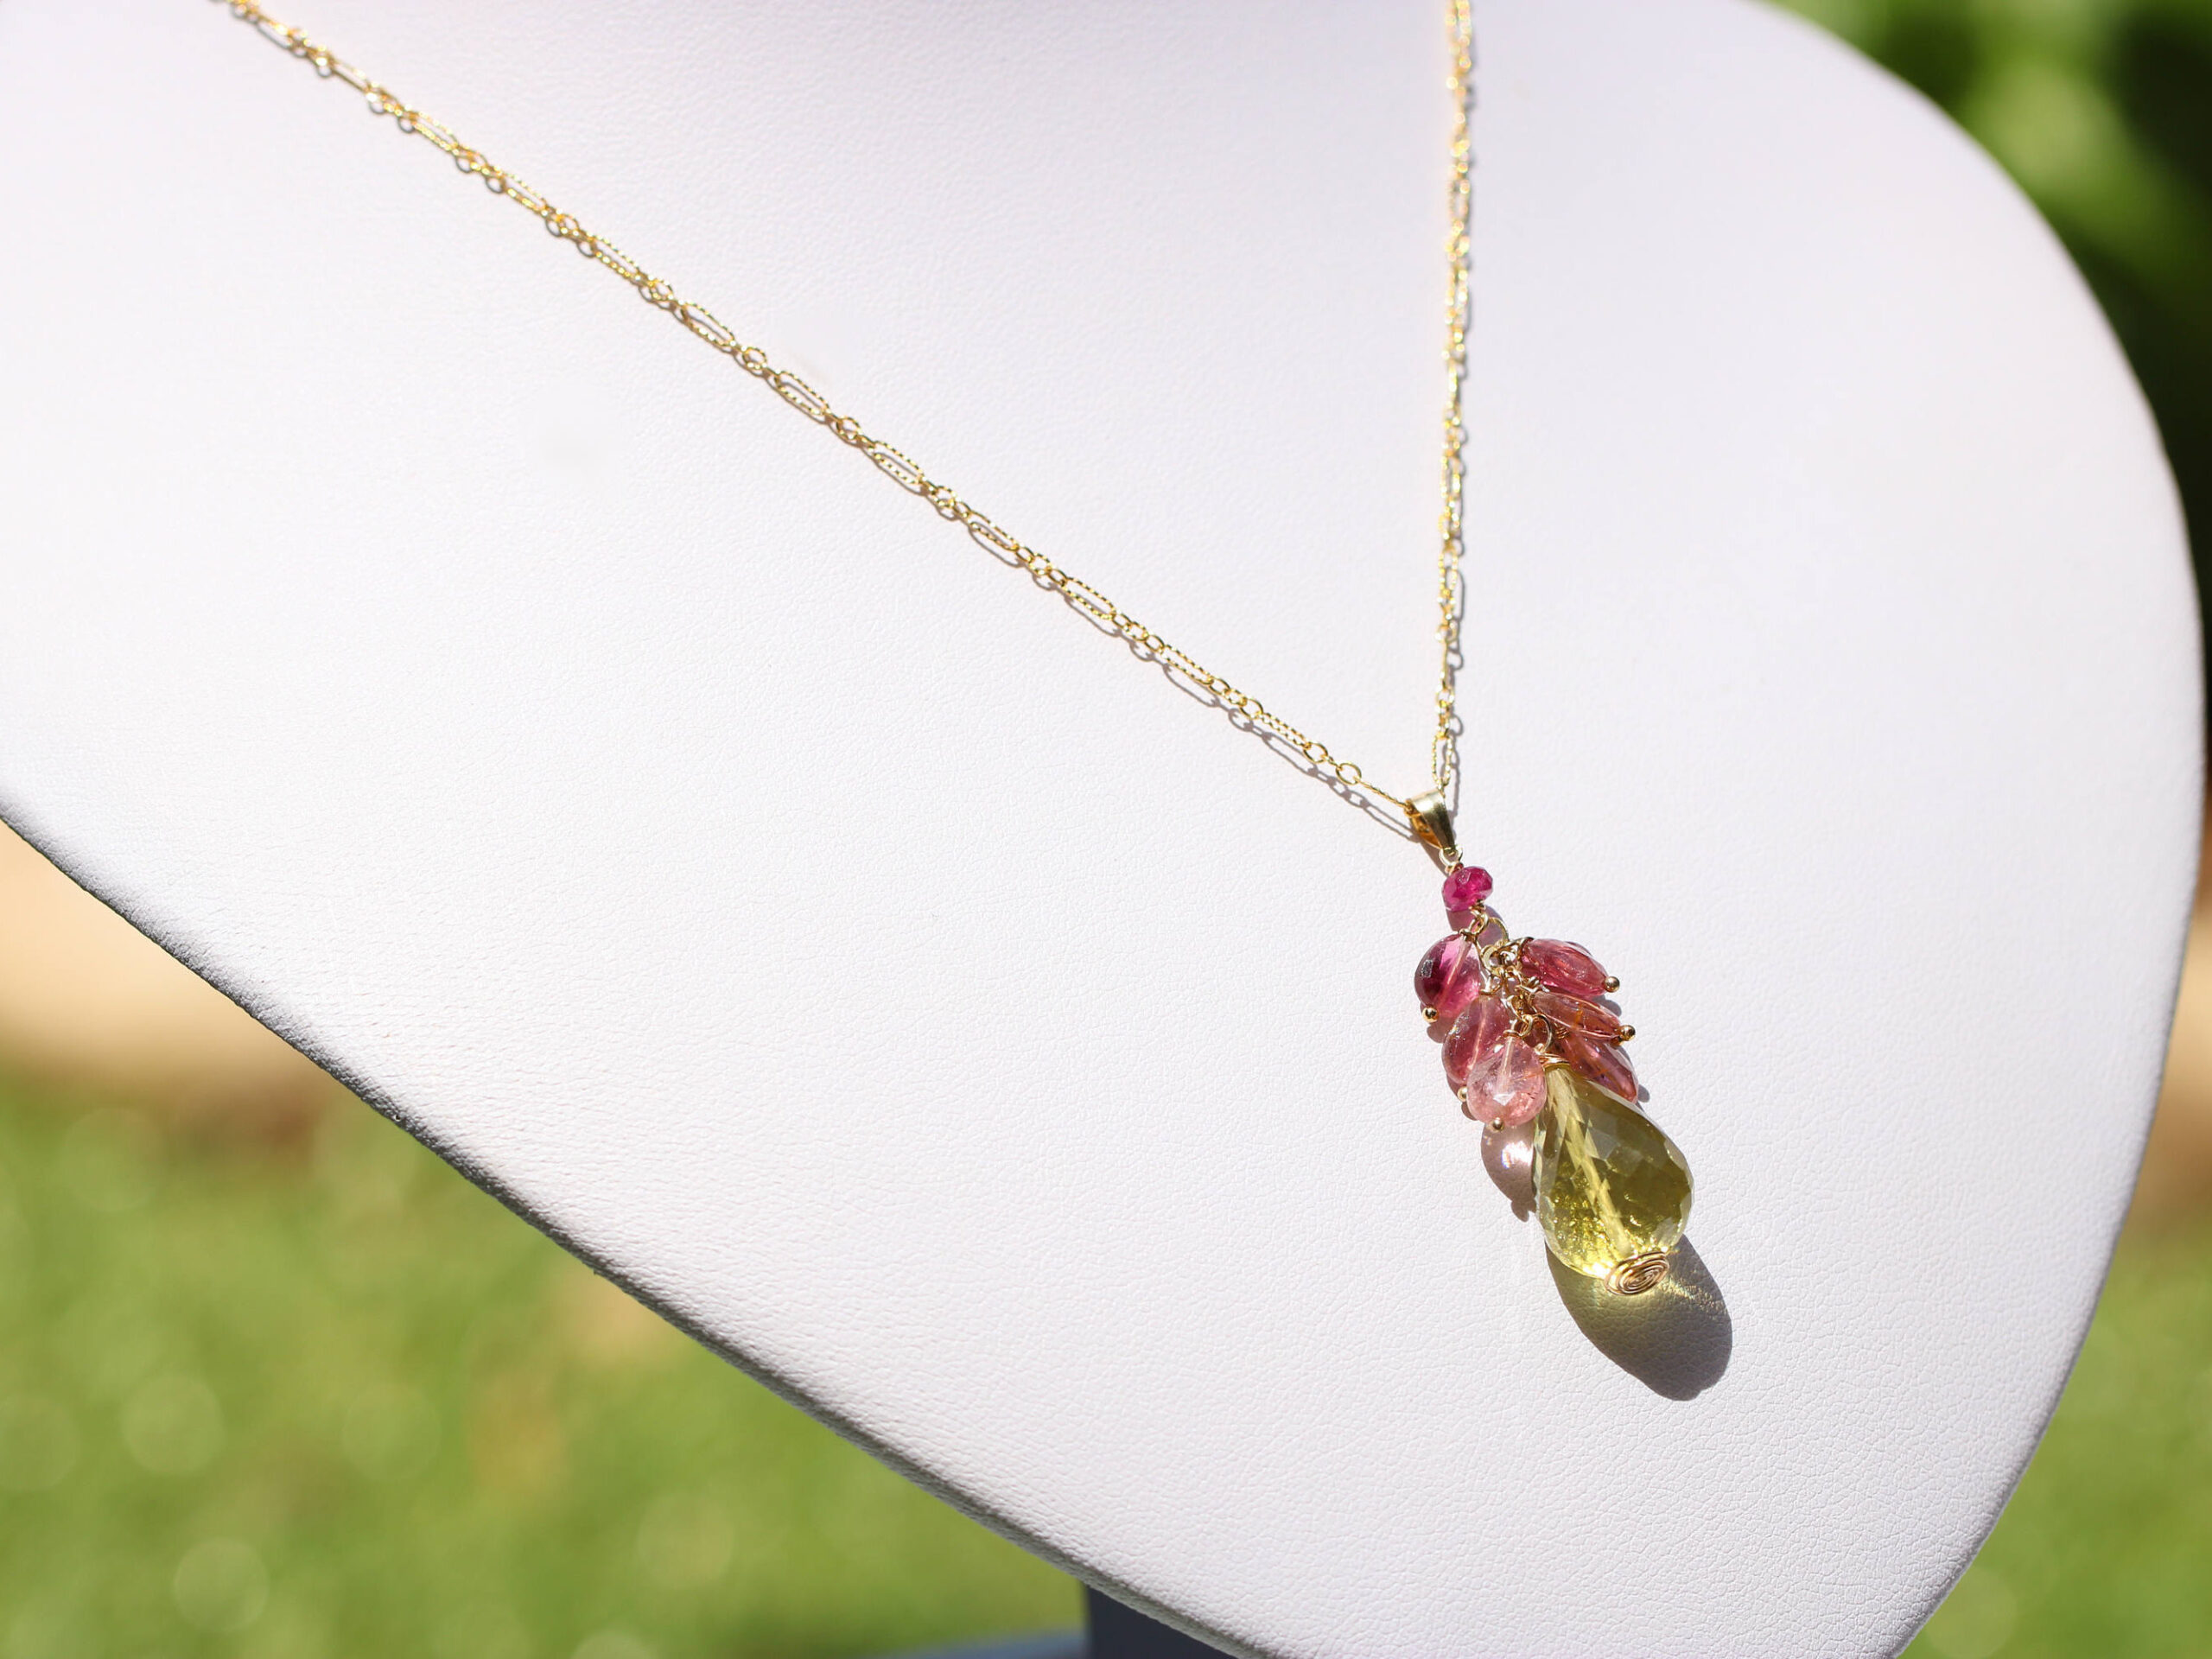 Pink Tourmaline with Lemon Quartz Pendant Necklace in Gold Filled